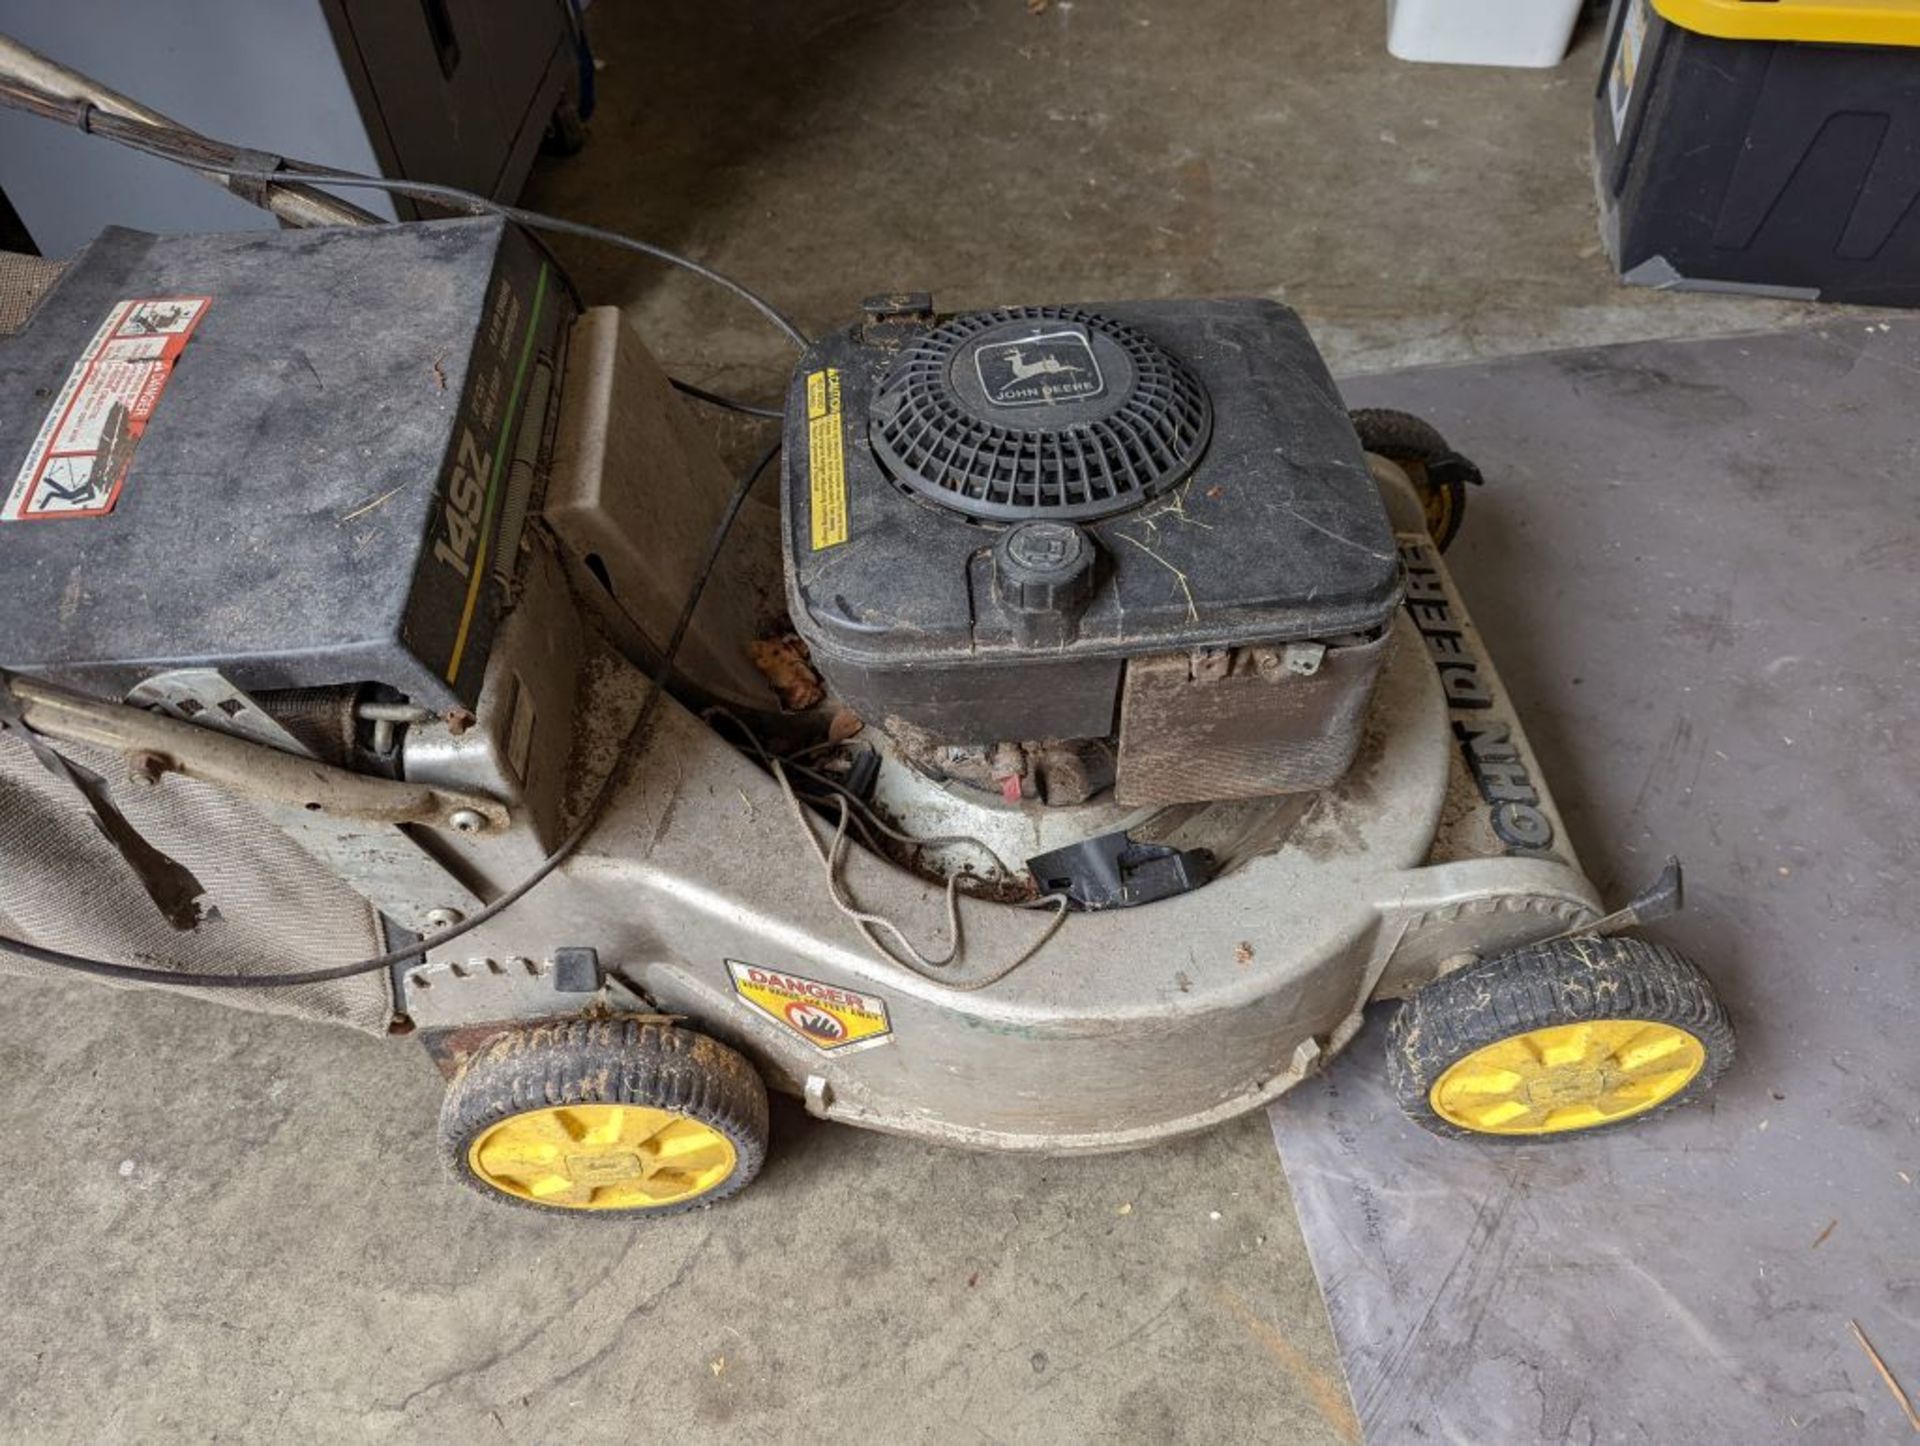 John Deere Lawn Mower | Model No. 14SZ; Tag: 232563 - Image 2 of 8